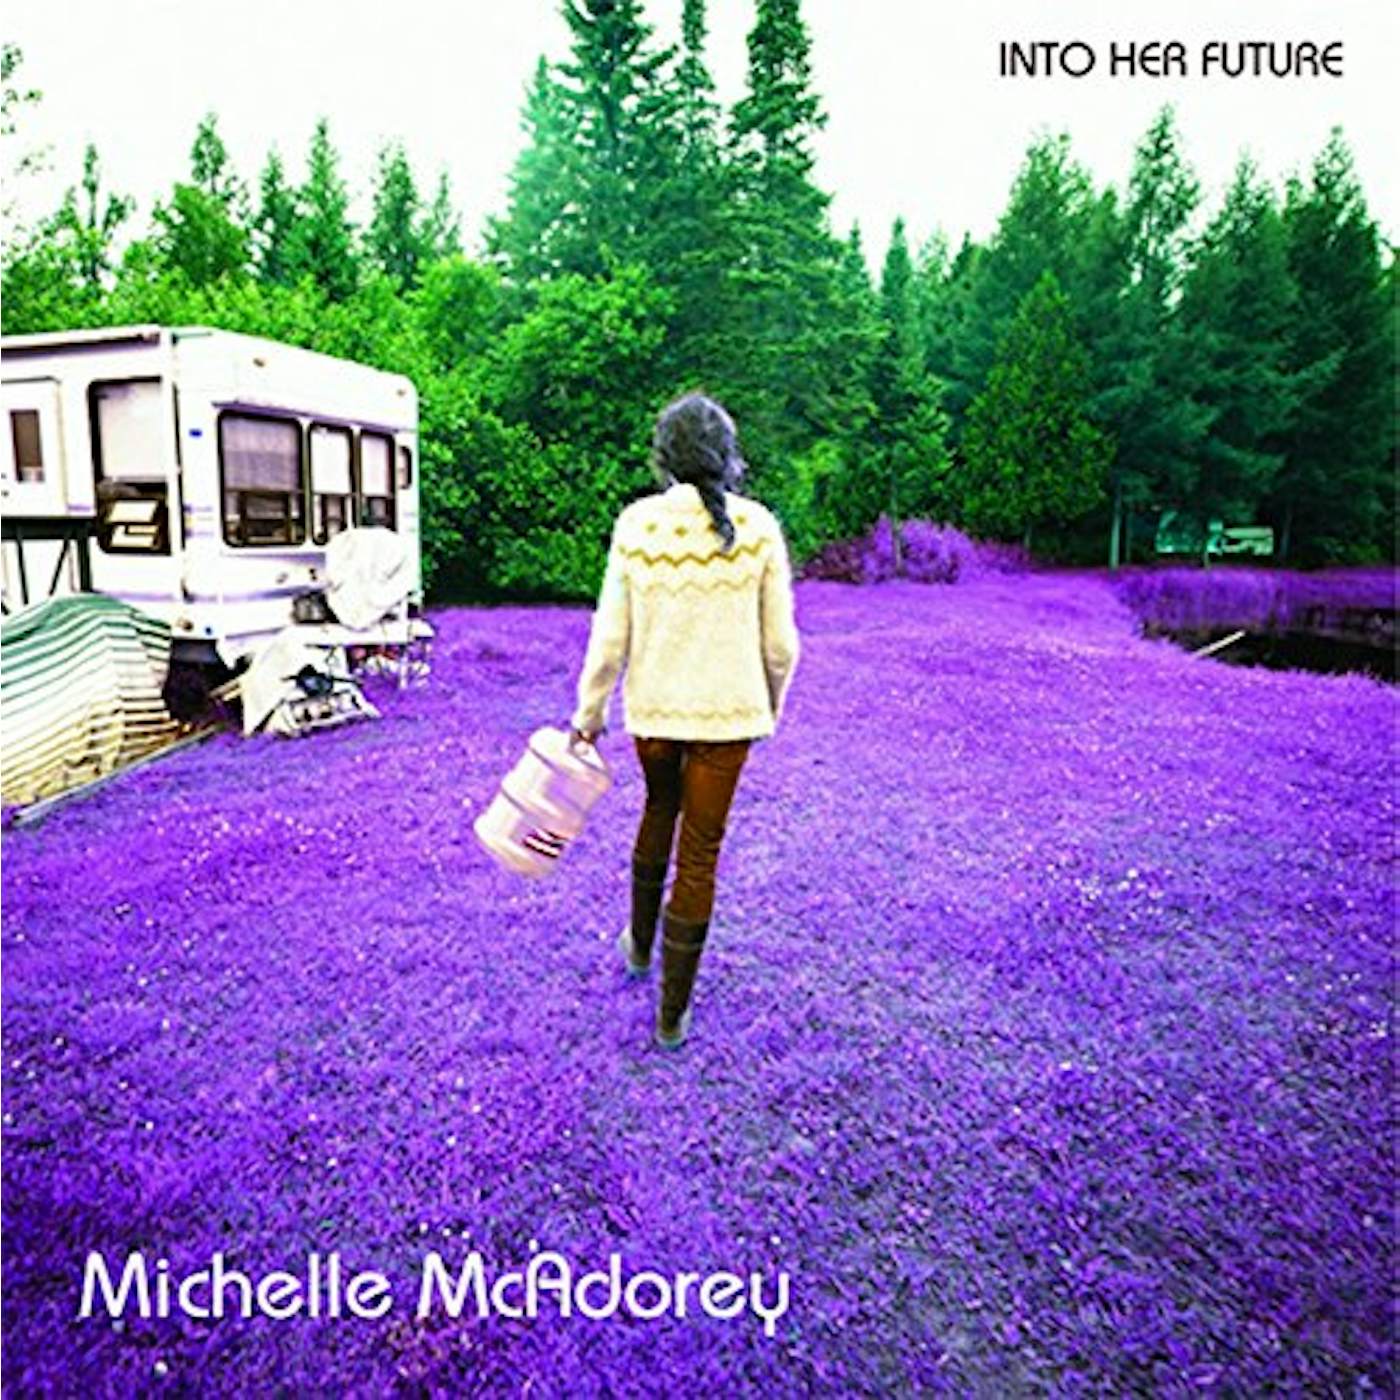 Michelle McAdorey INTO HER FUTURE (LP) Vinyl Record